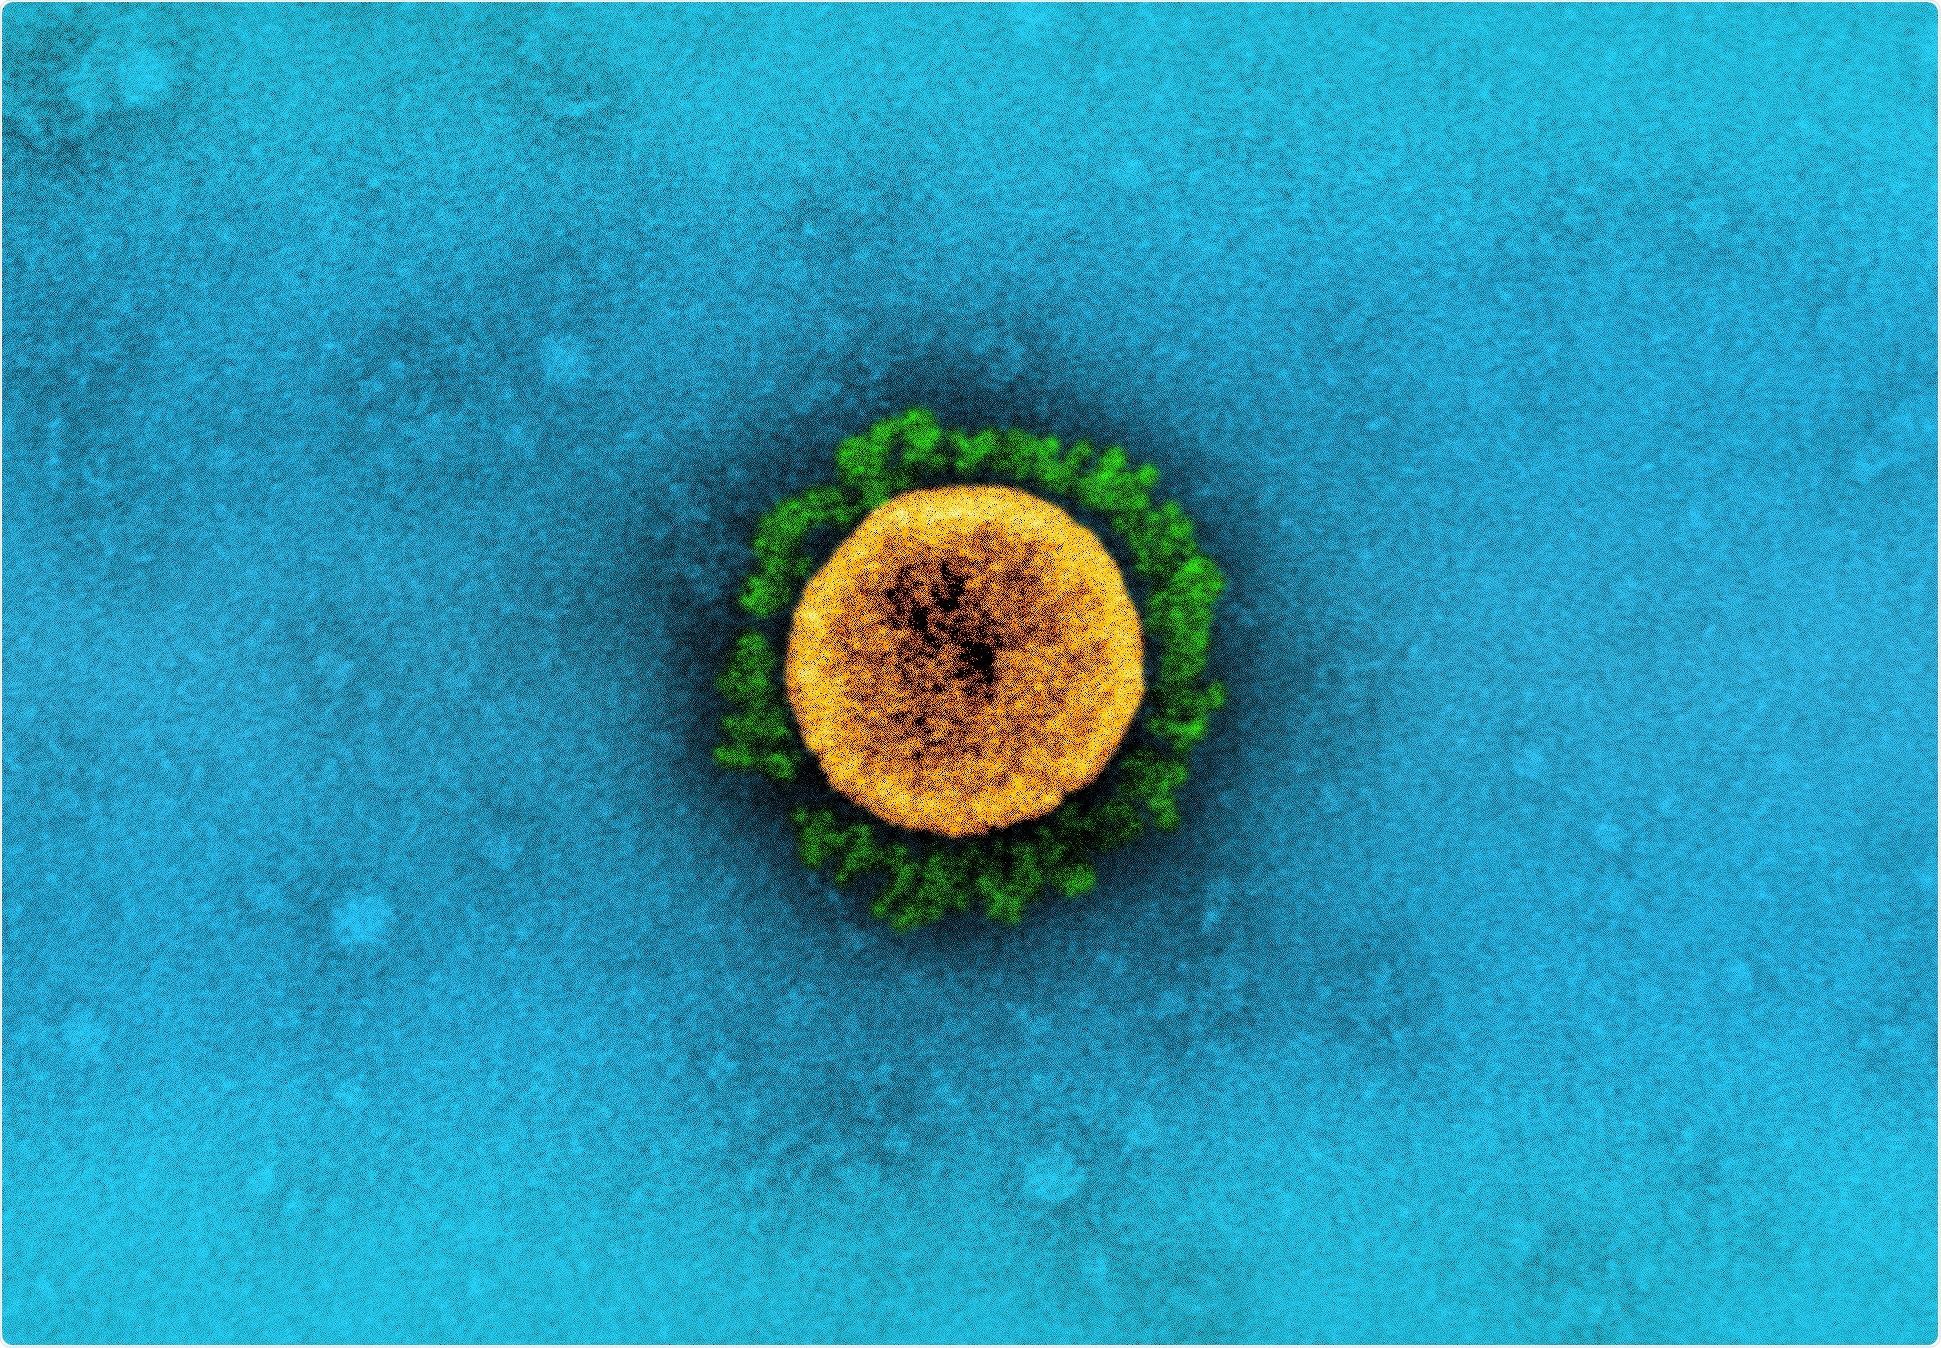 Study: Epidemiological characteristics of the B.1.526 SARS-CoV-2 variant. Image Credit: NIAID